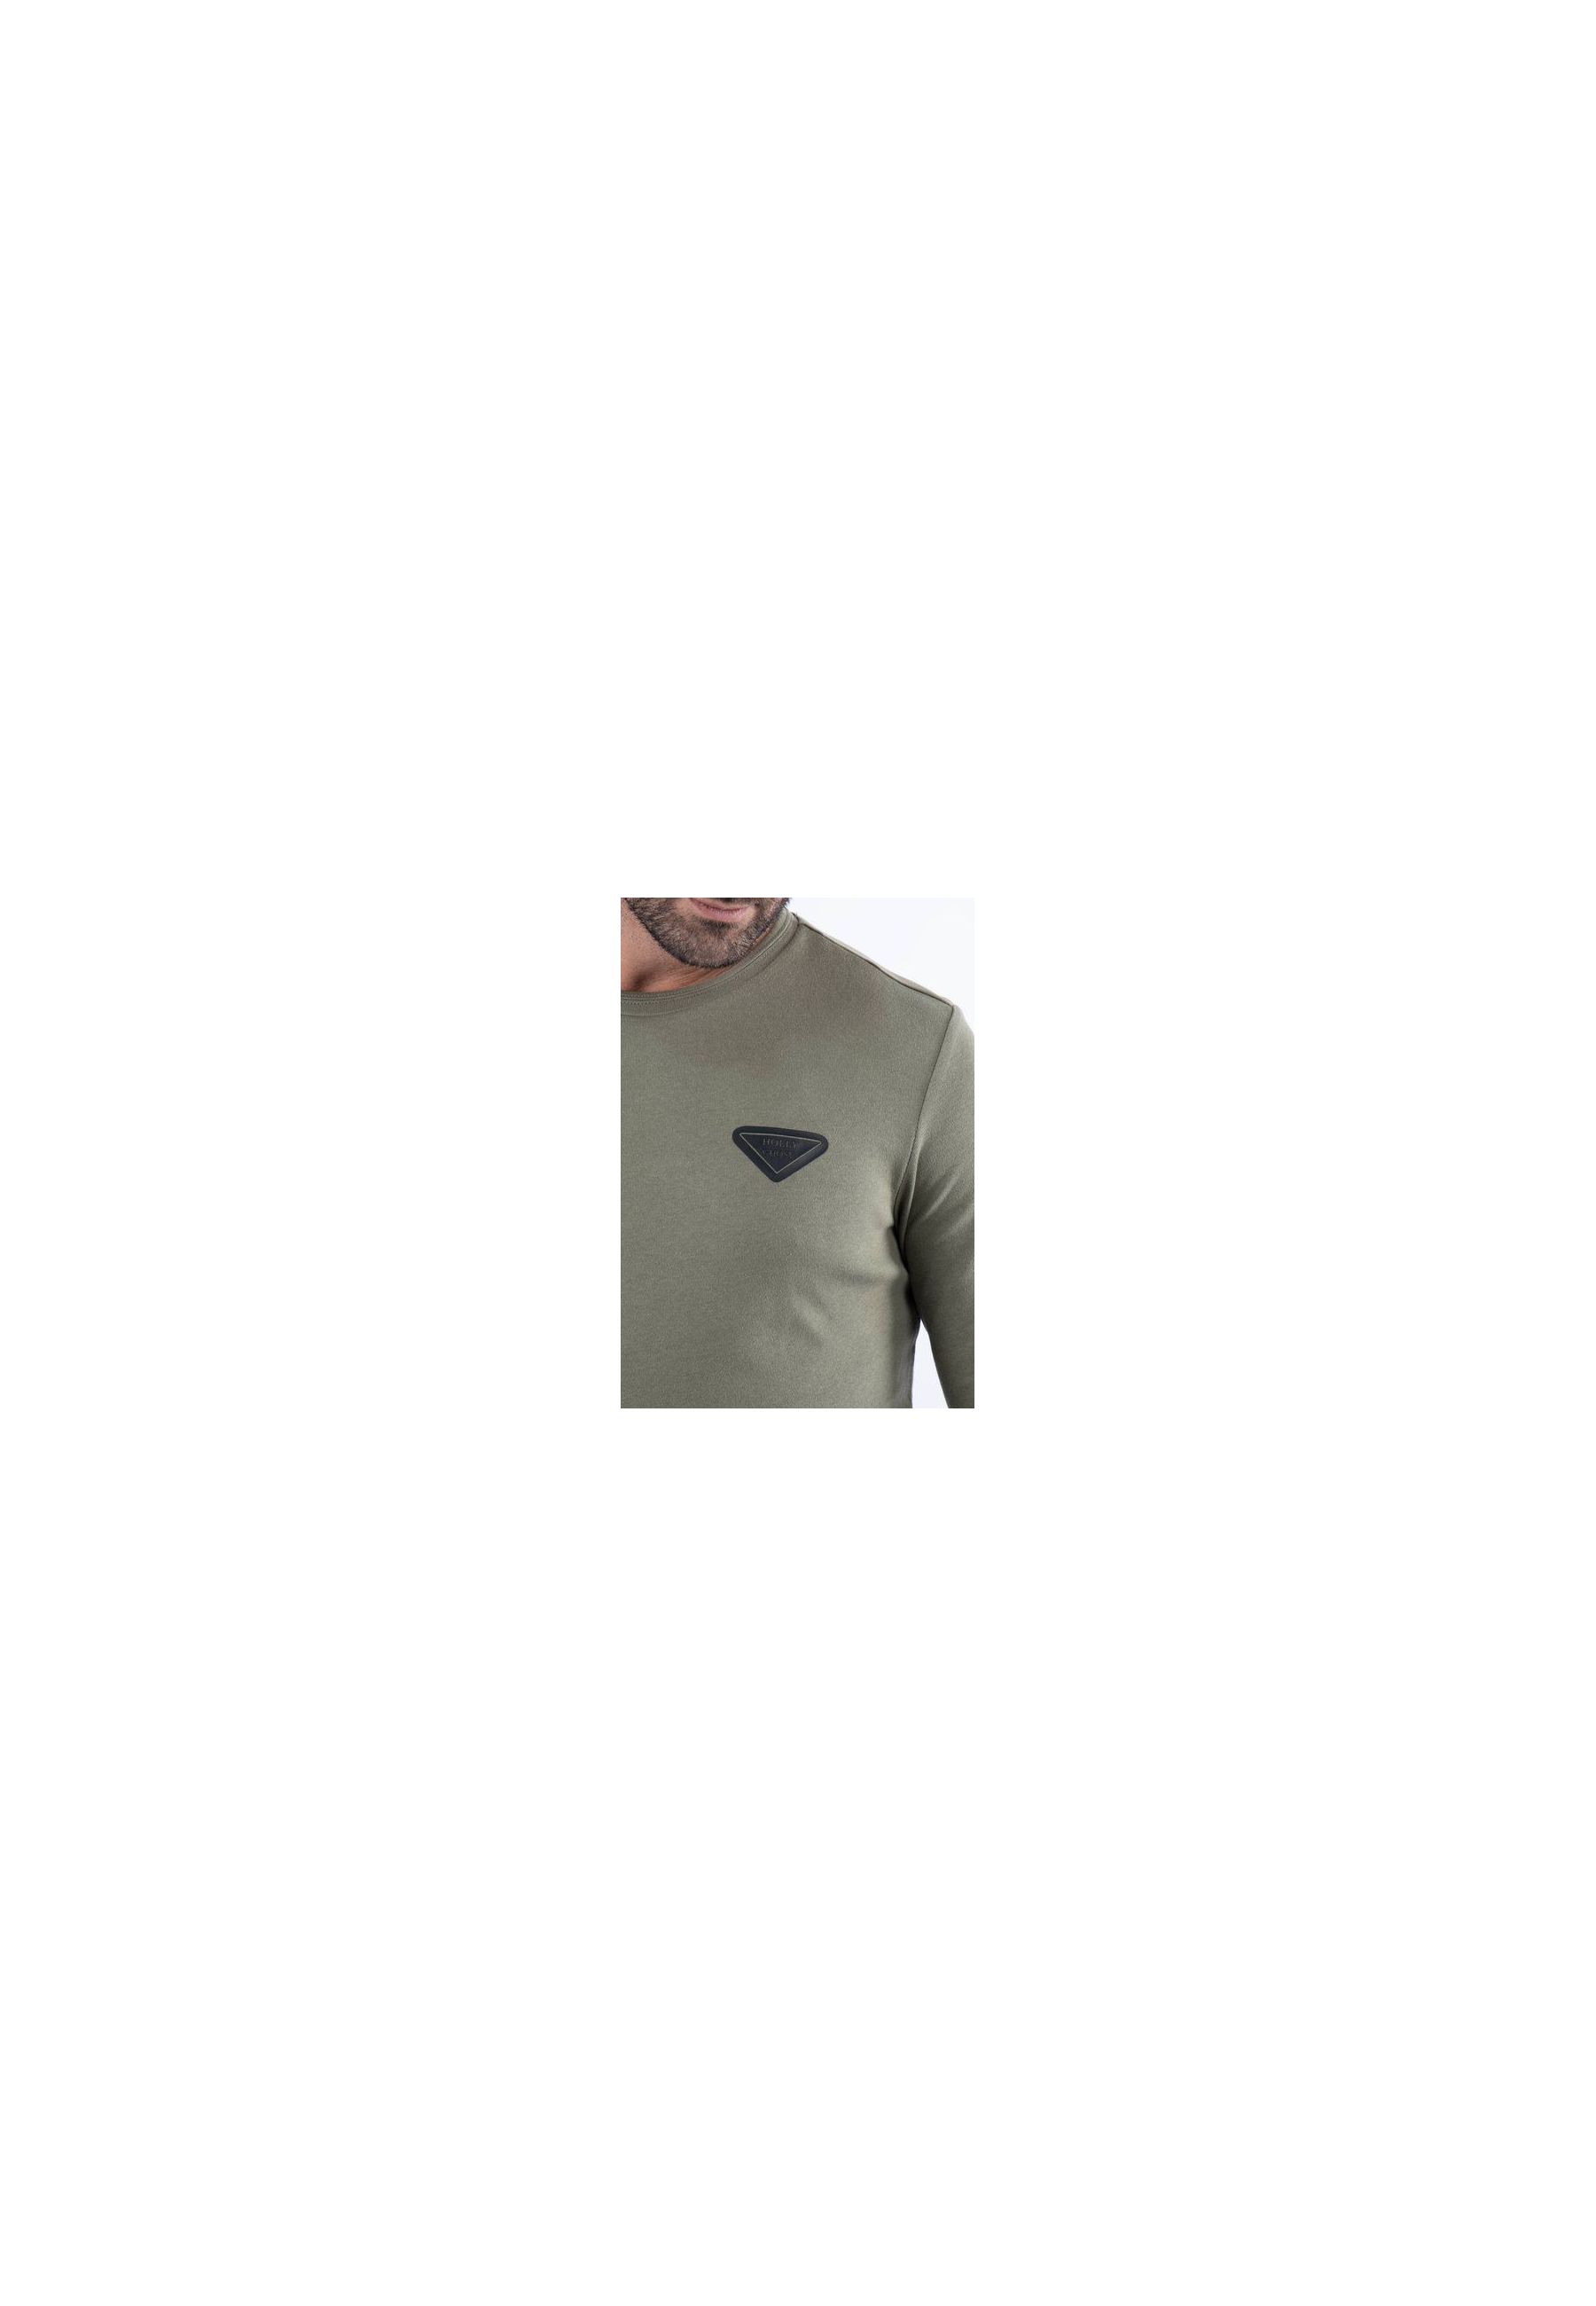 T-shirt kaki avec triangle noir sur poitrine et inscription hollyghost